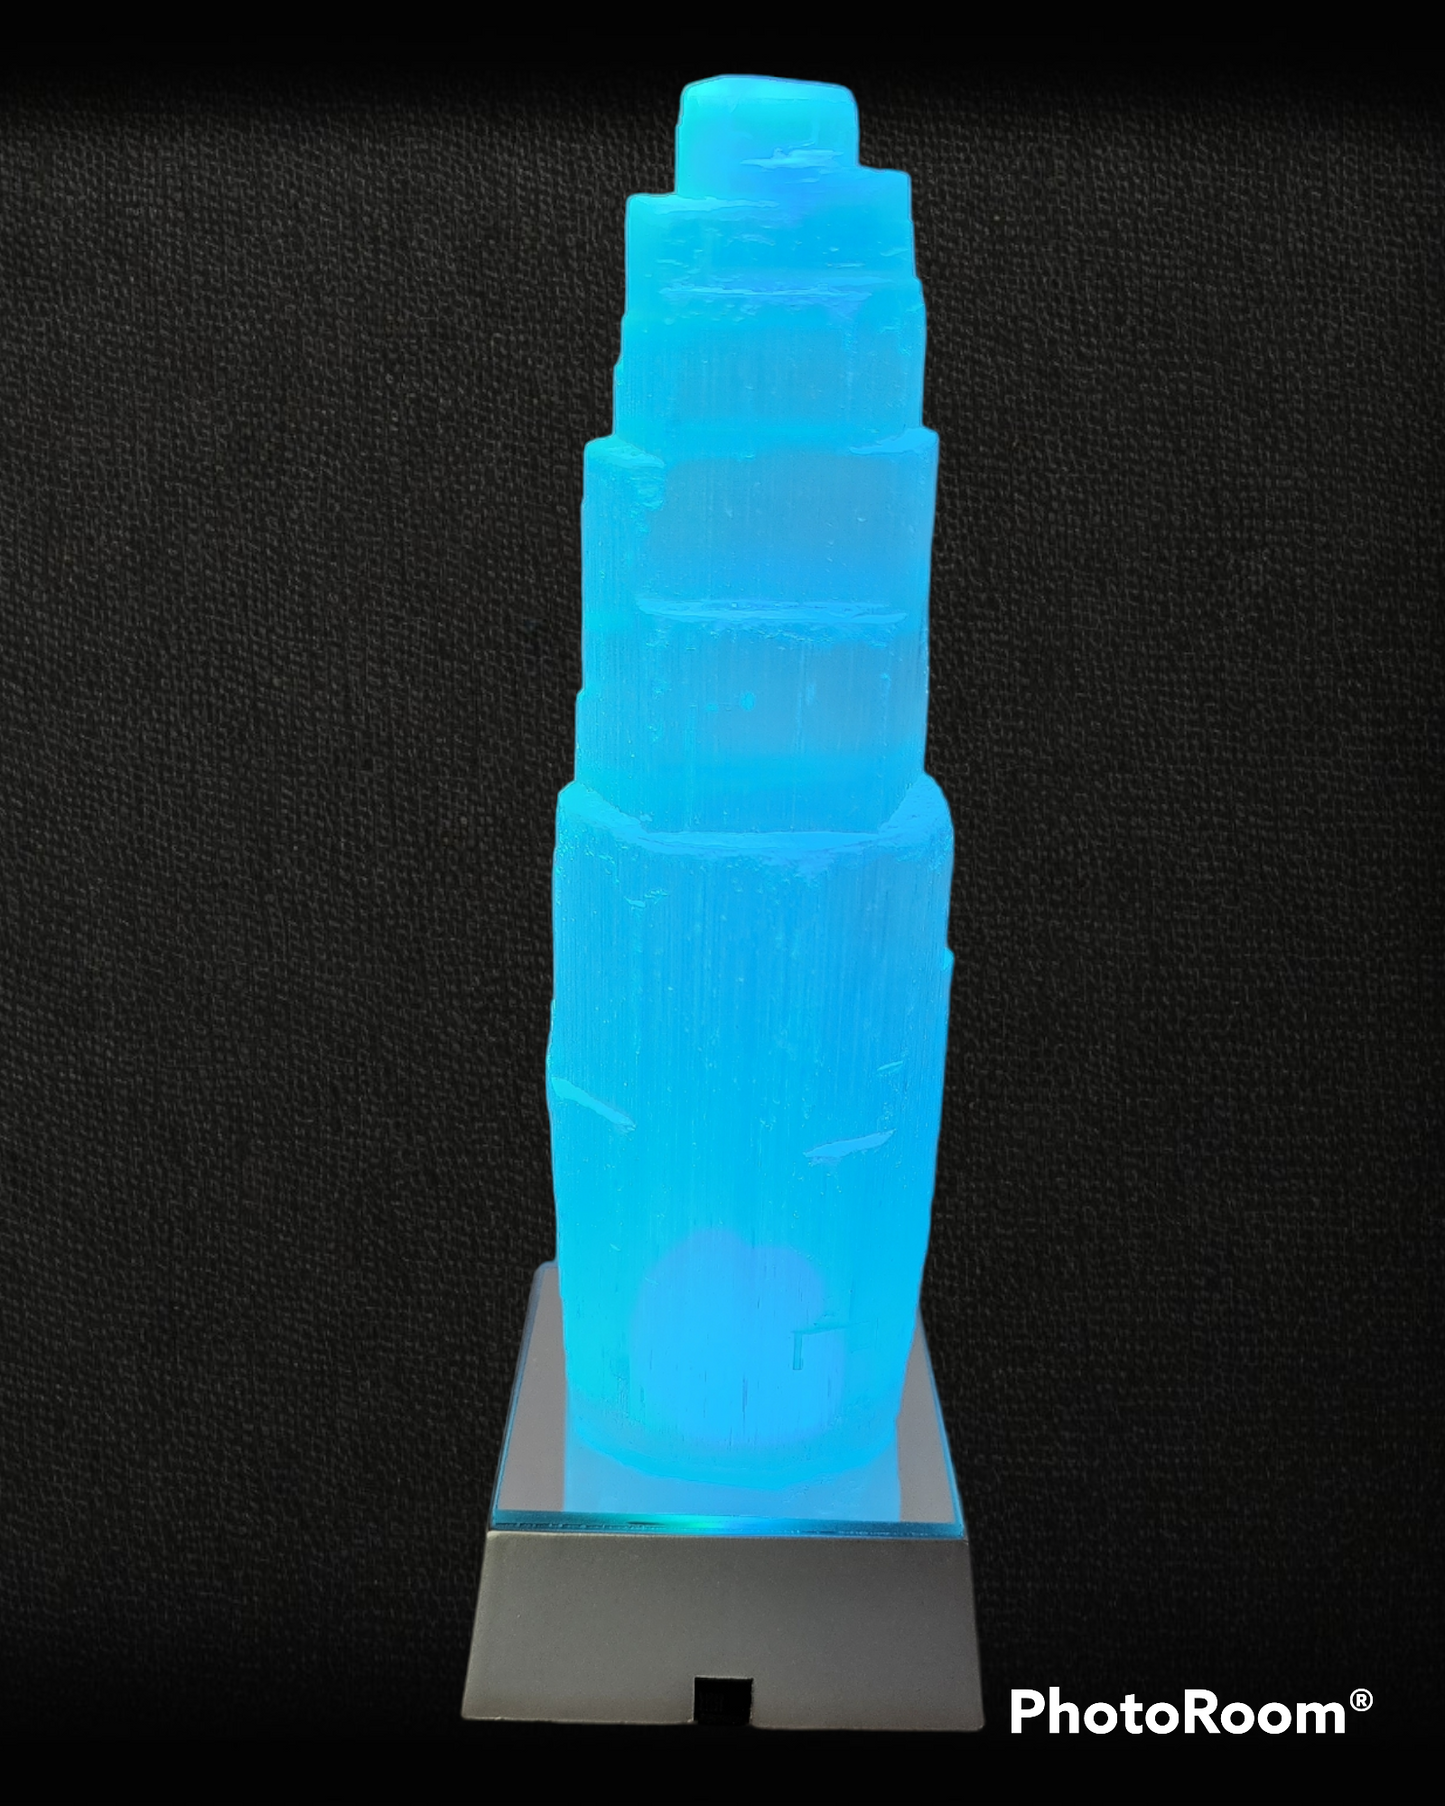 7" Selenite Skyscraper Tower Lamp - Color Changing Crystal LED Lamp/Light - Reiki Infused